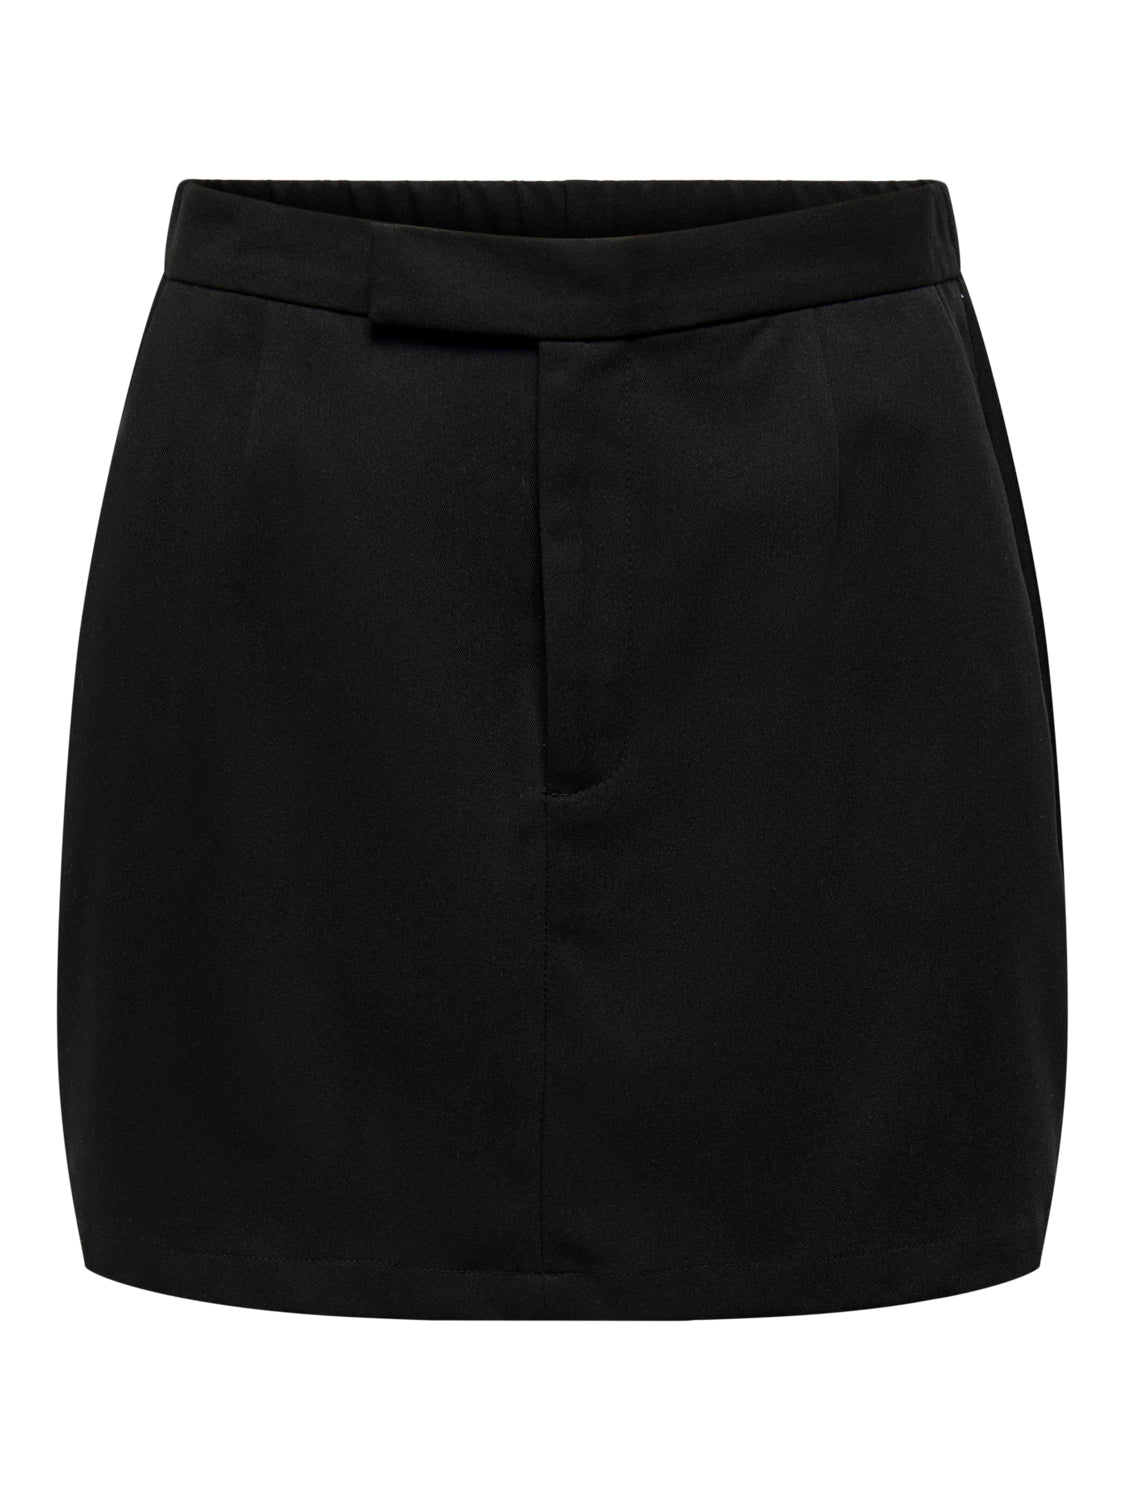 STUKATO Skirt - Black